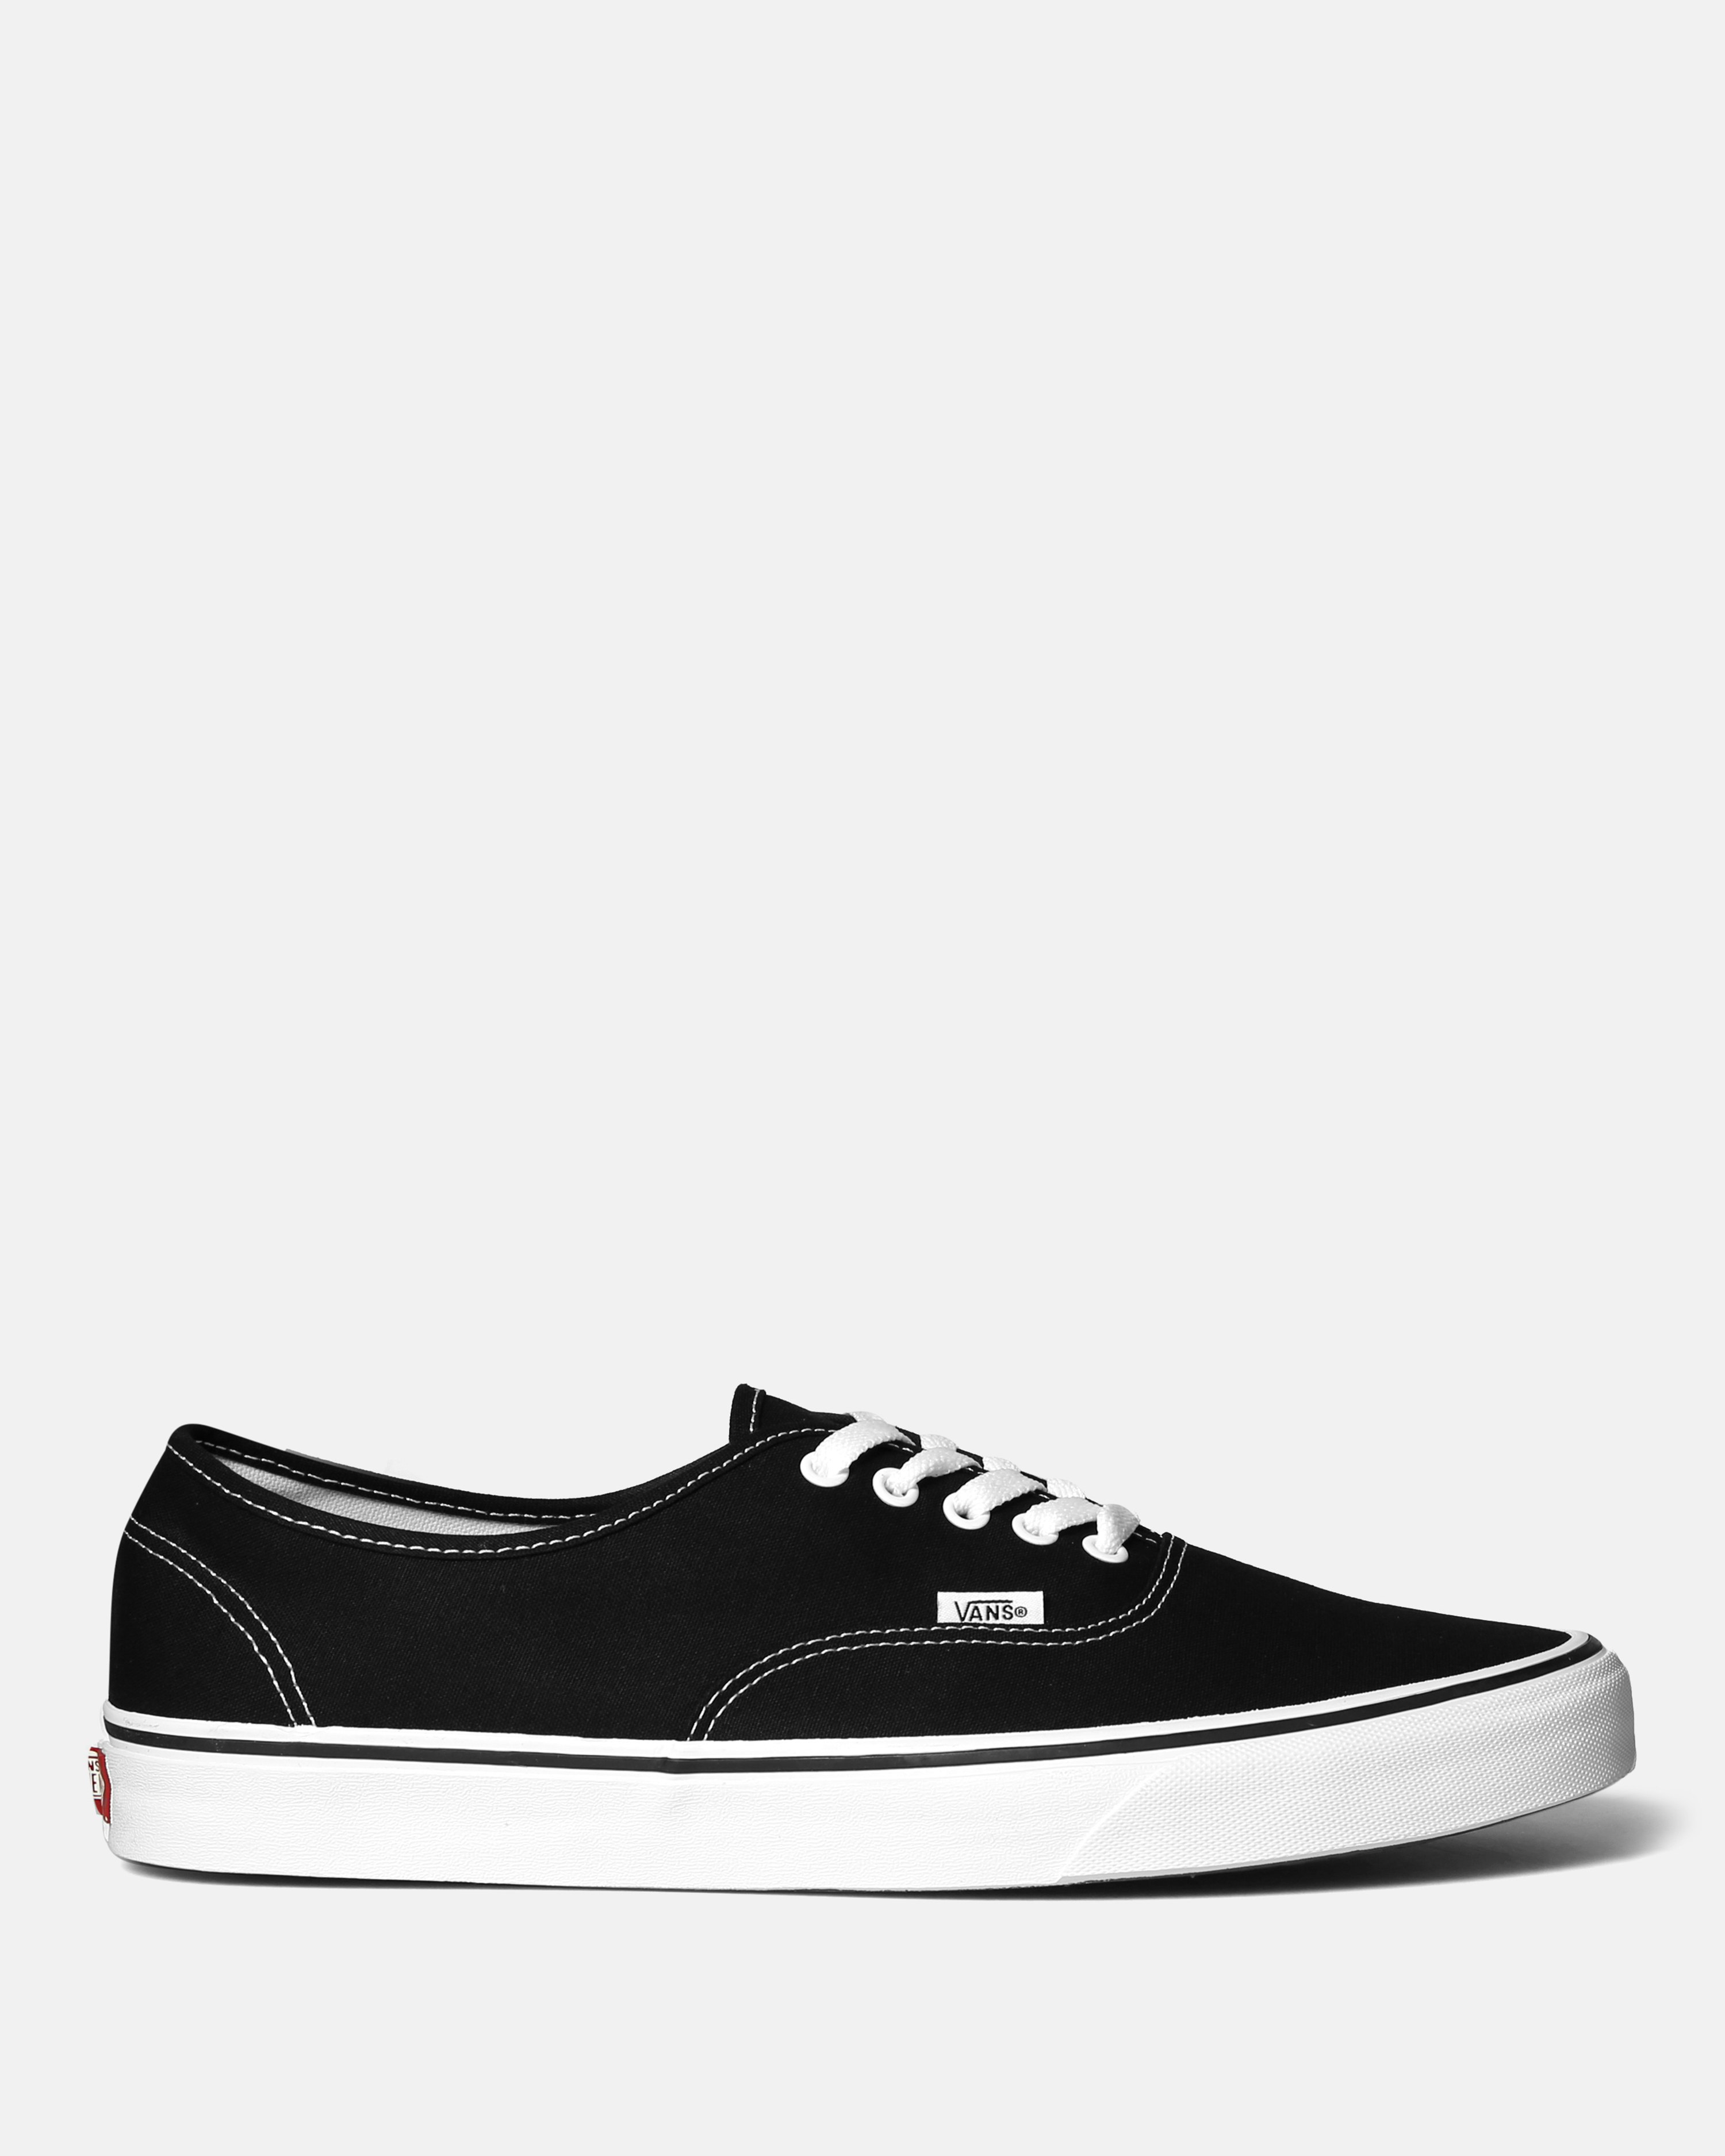 Buy Vans Unisex Old Skool Lace-Up Sneakers Black (Classic Tumble/Black/True  White) 3.5 UK at Amazon.in